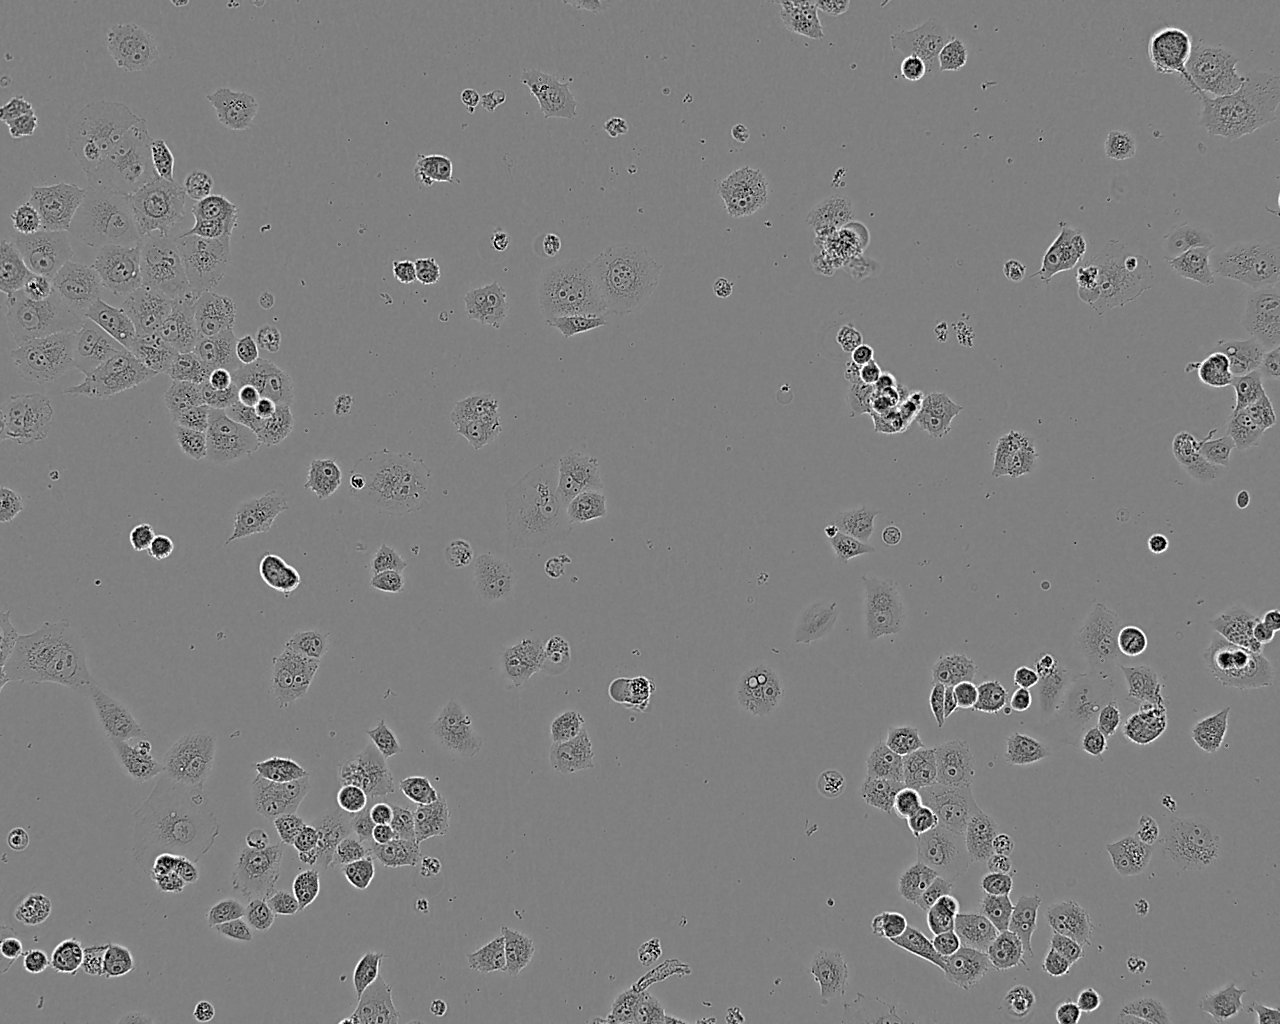 RCC23 Cell:人肾透明细胞癌细胞系